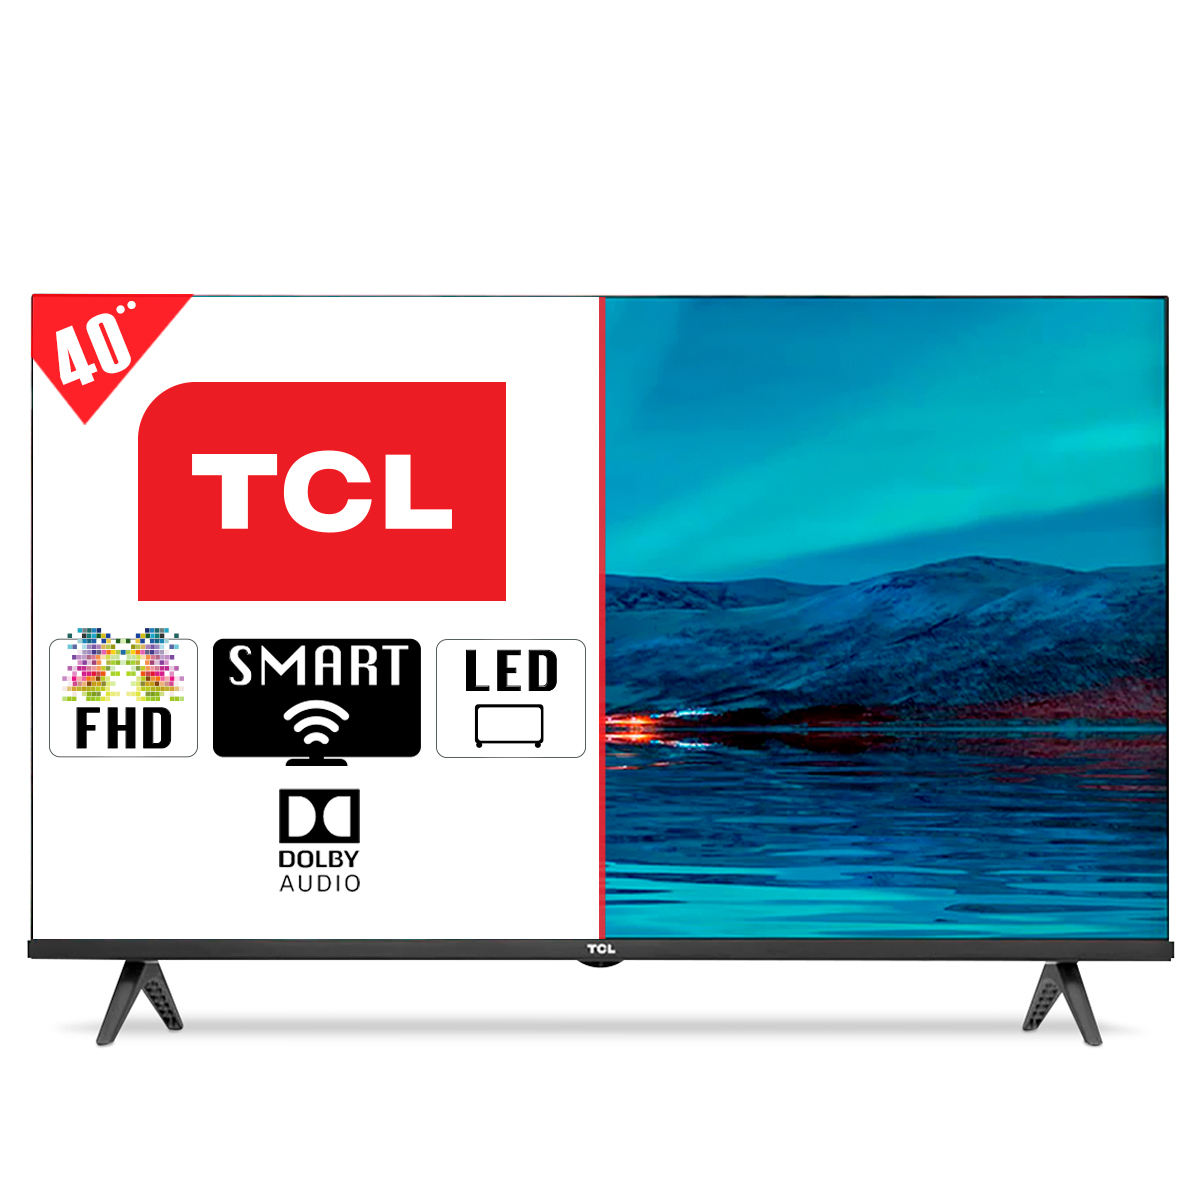 Pantalla TV TCL 40A343 / Full HD / 40 Pulg. / Smart TV / Led / Bluetooth / Dolby Audio / HDMI / USB